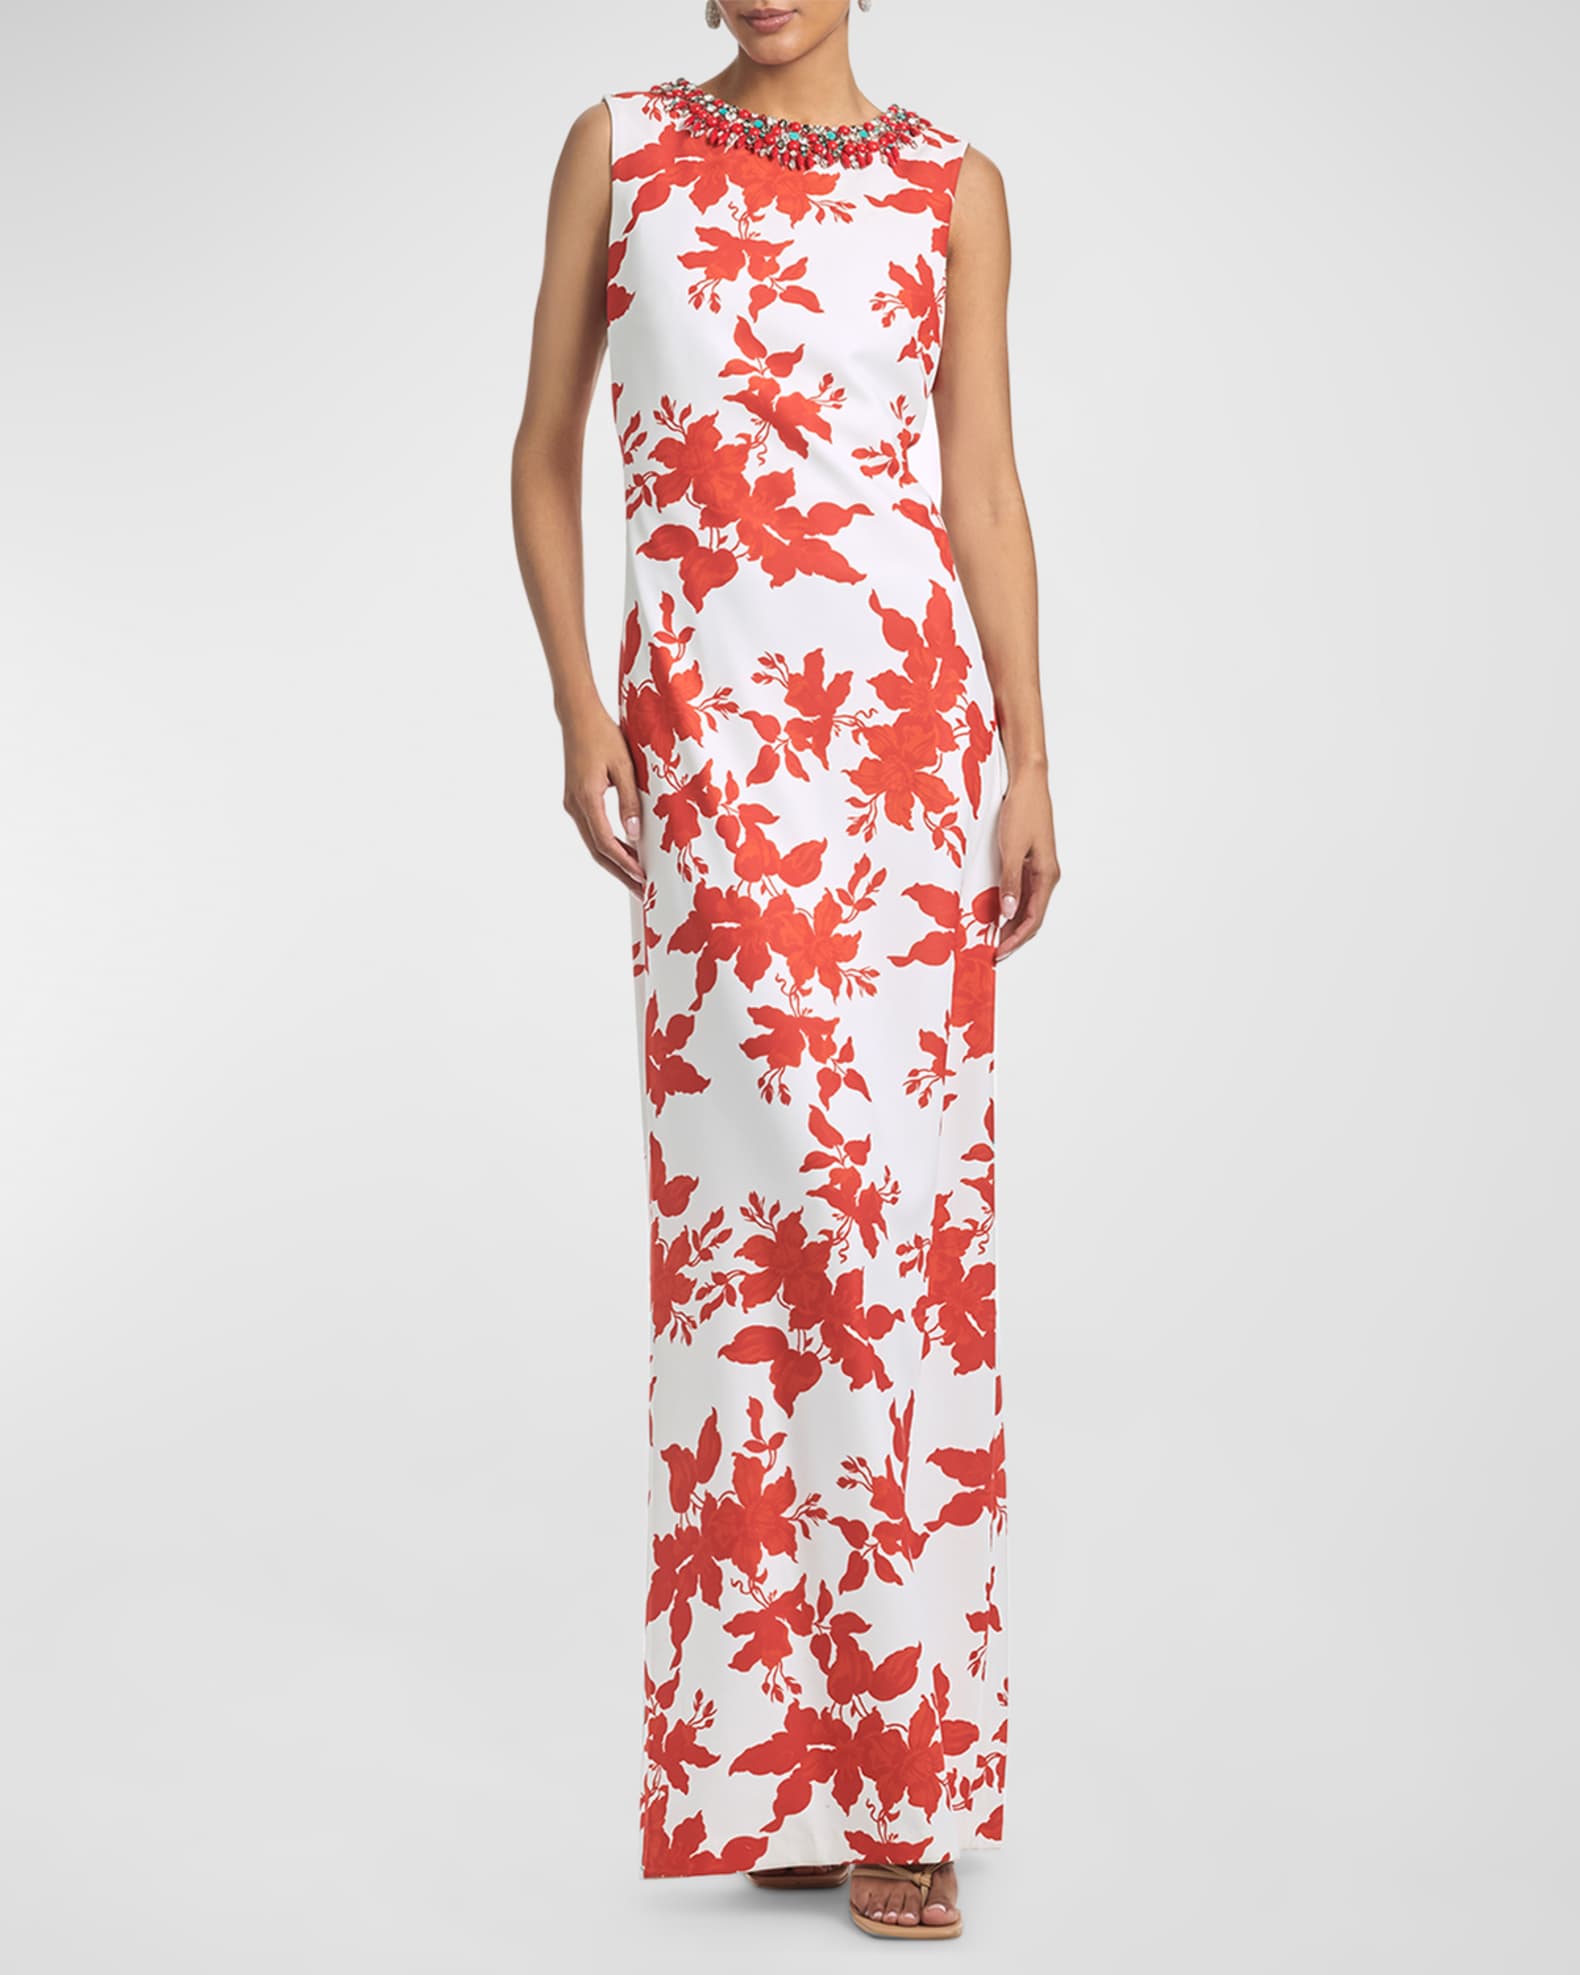 Sachin & Babi Juliana Embellished Floral-Print Column Gown | Neiman Marcus